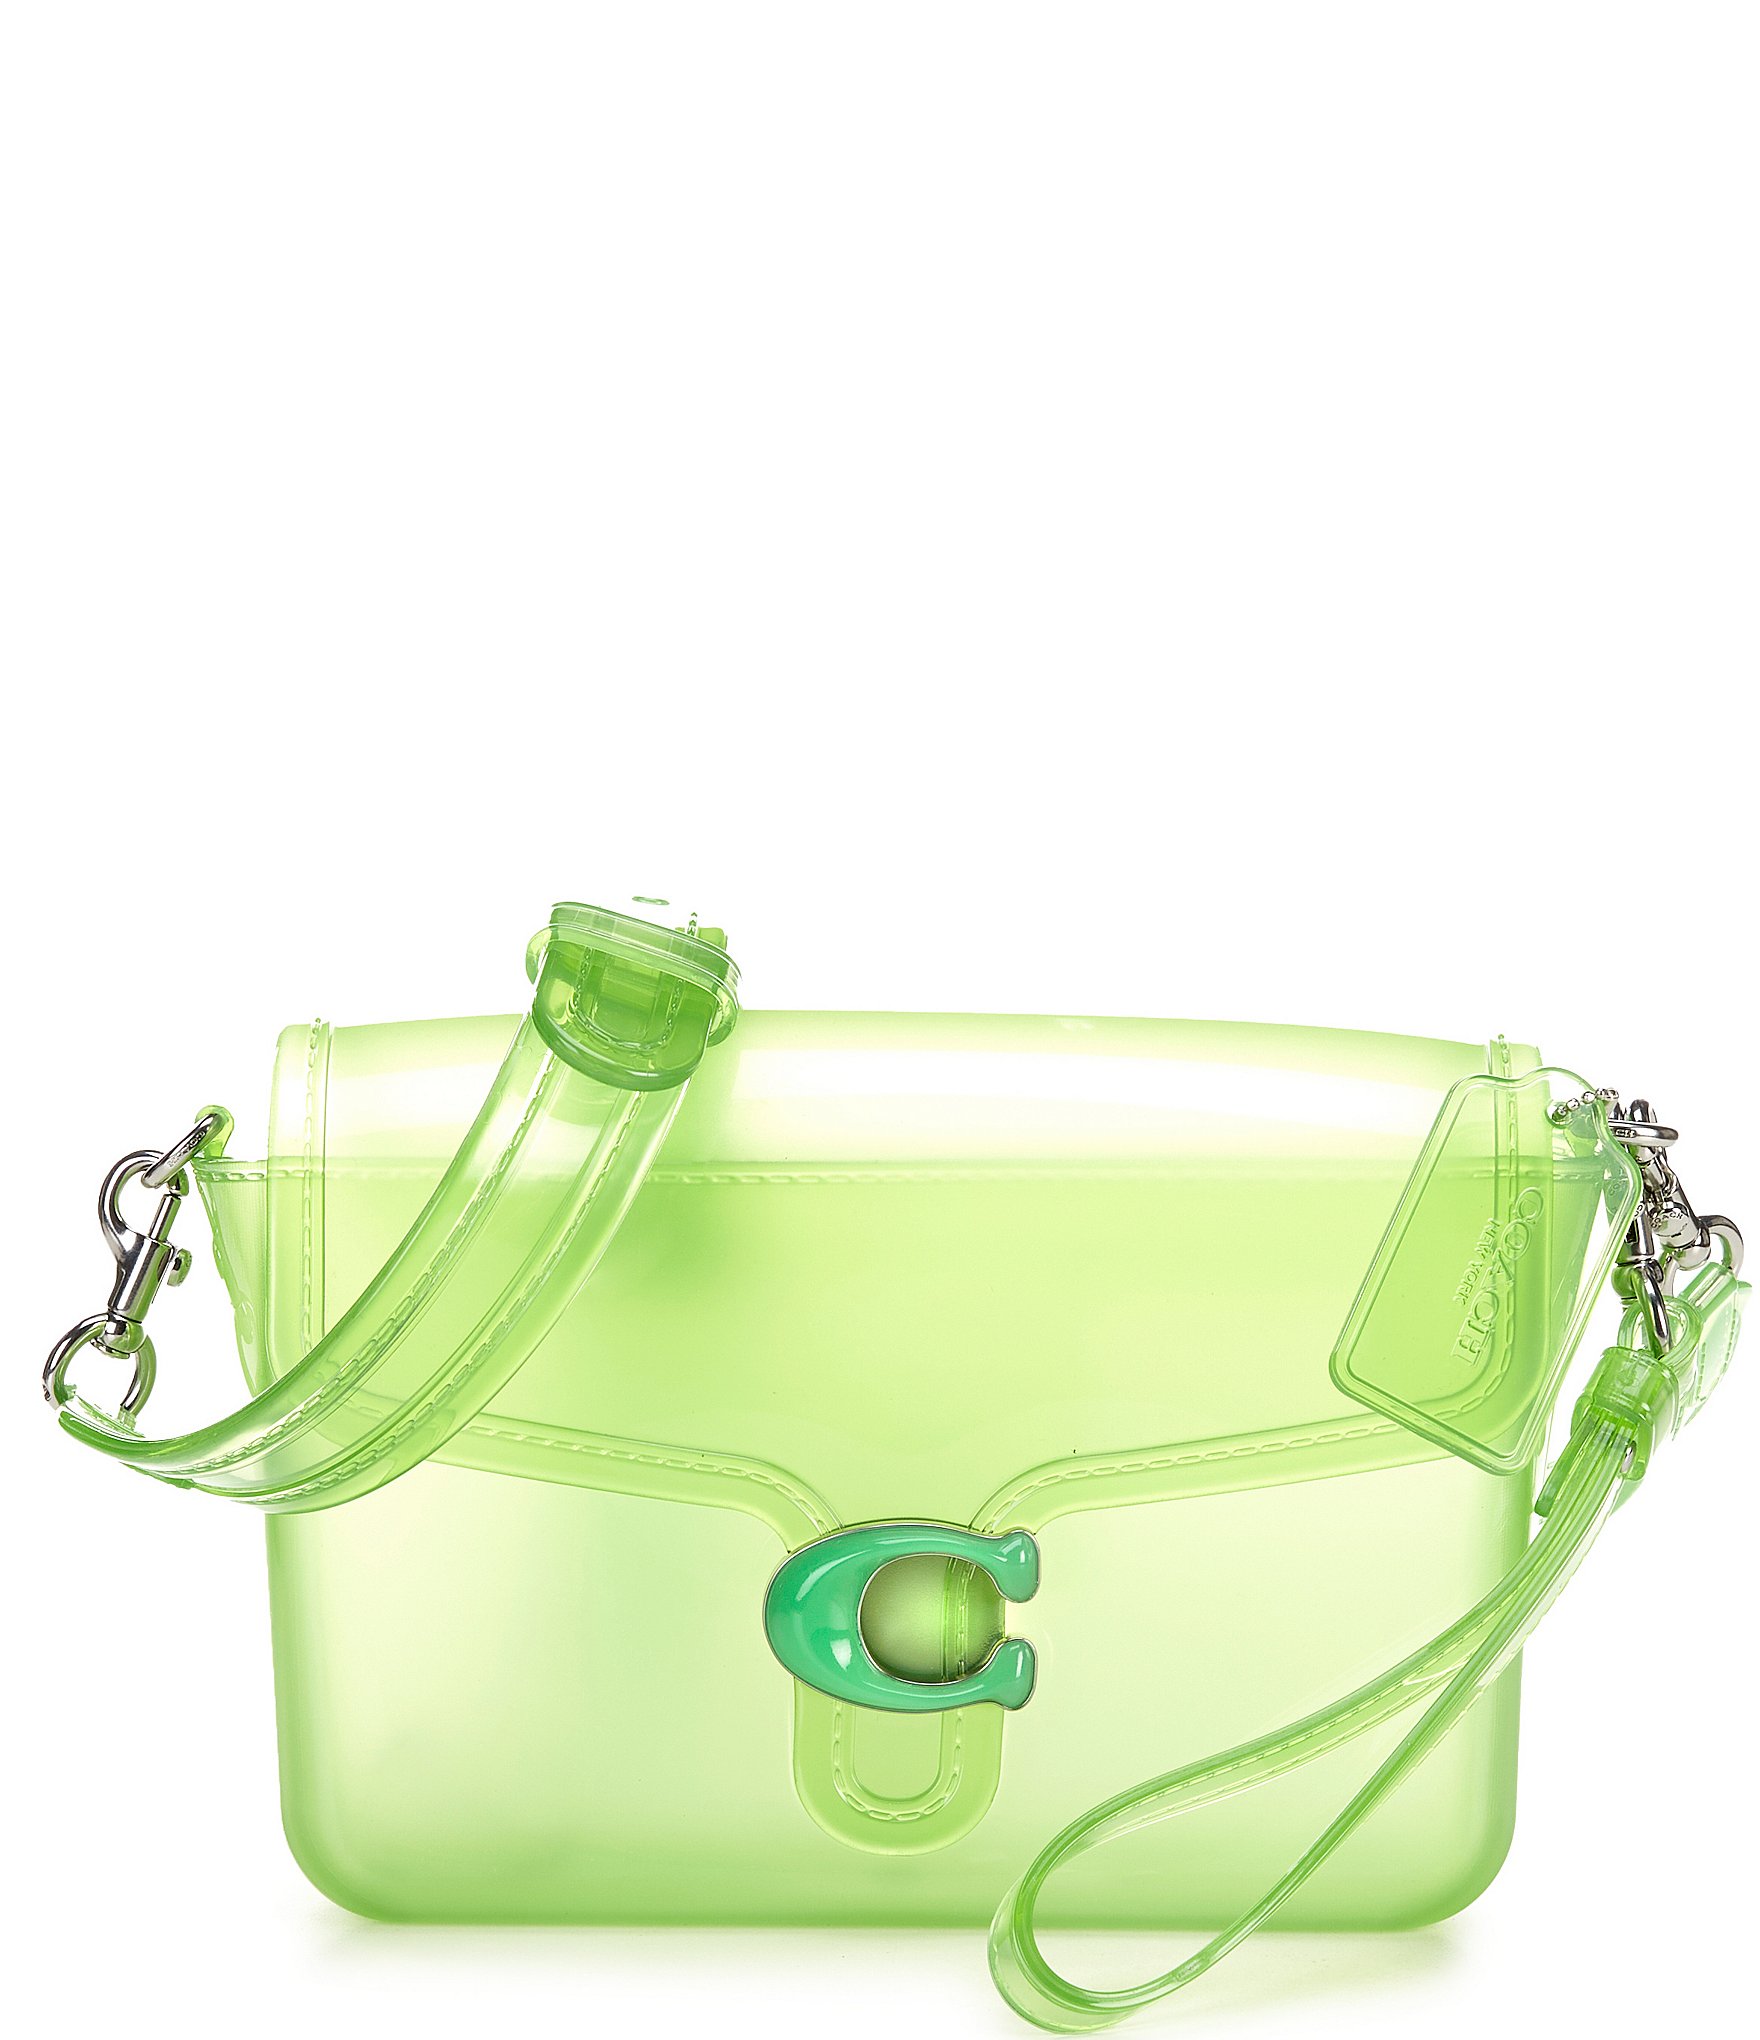 clear bag: Handbags | Dillard's